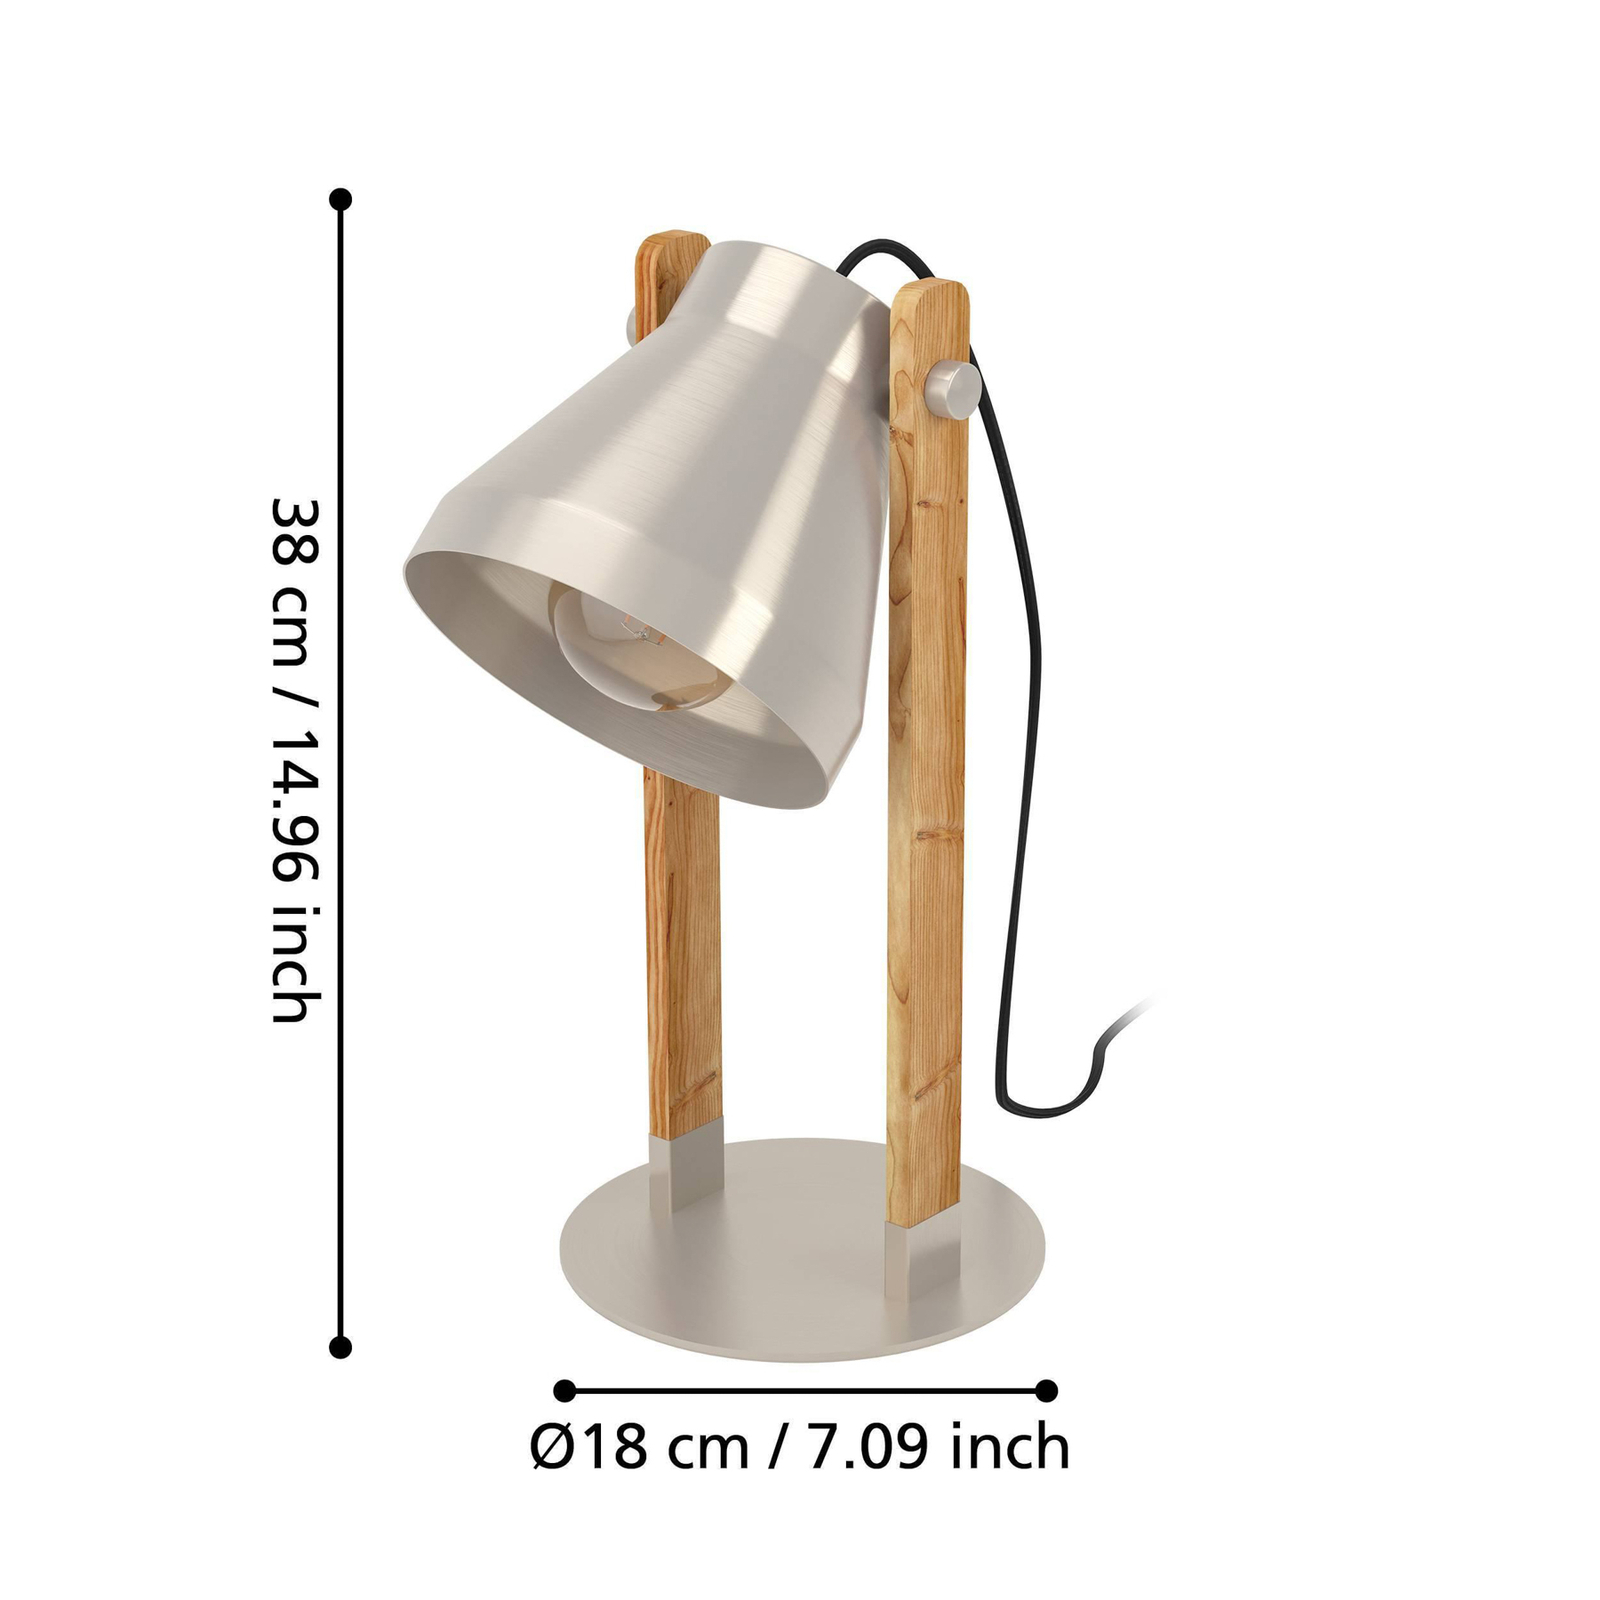 Stolna lampa Cawton, visina 38 cm, čelik/smeđa, čelik/drvo